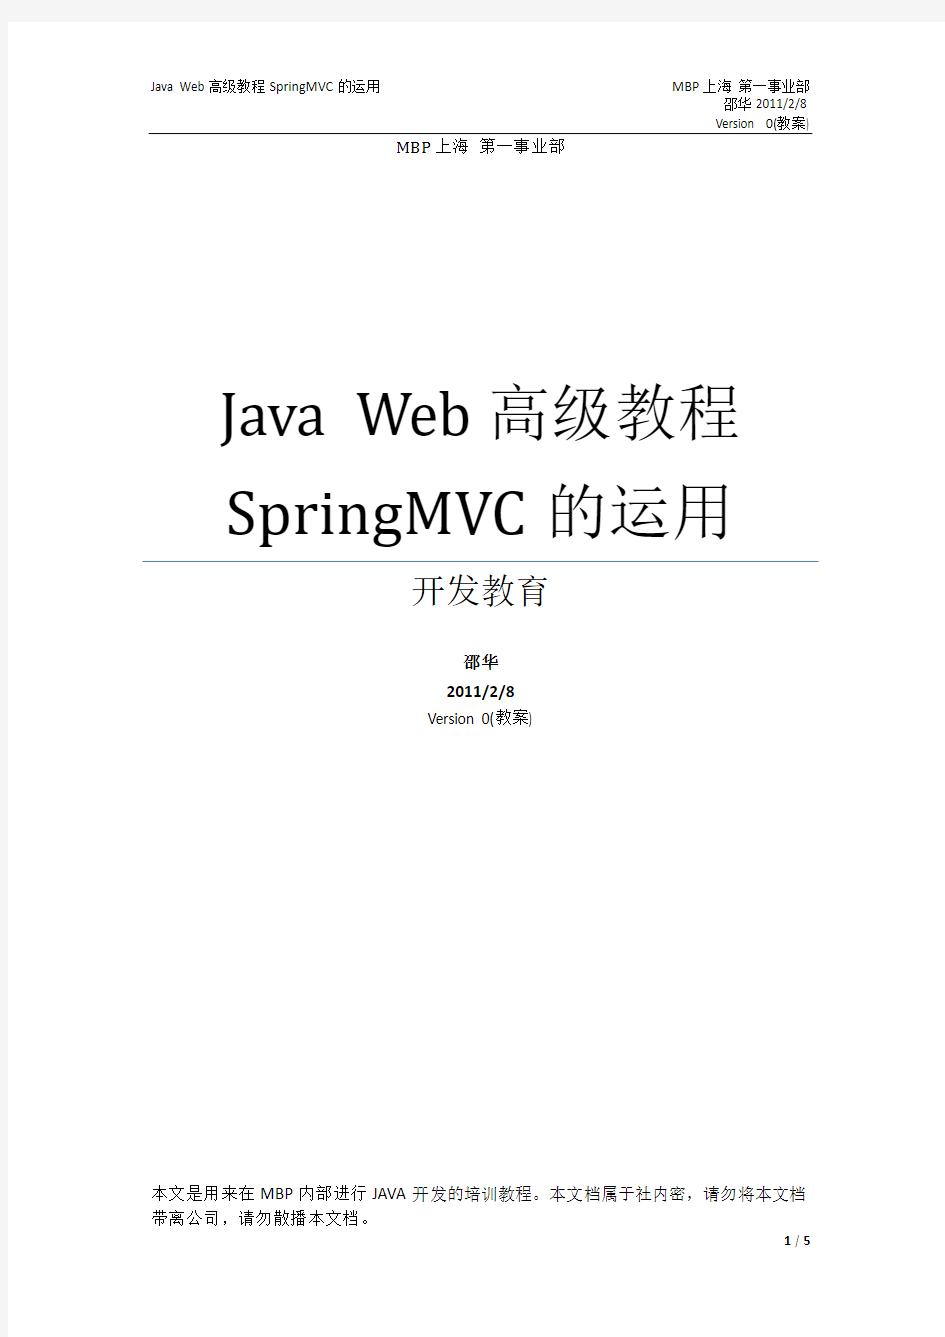 Java Web高级教程SpringMVC的运用(提纲)